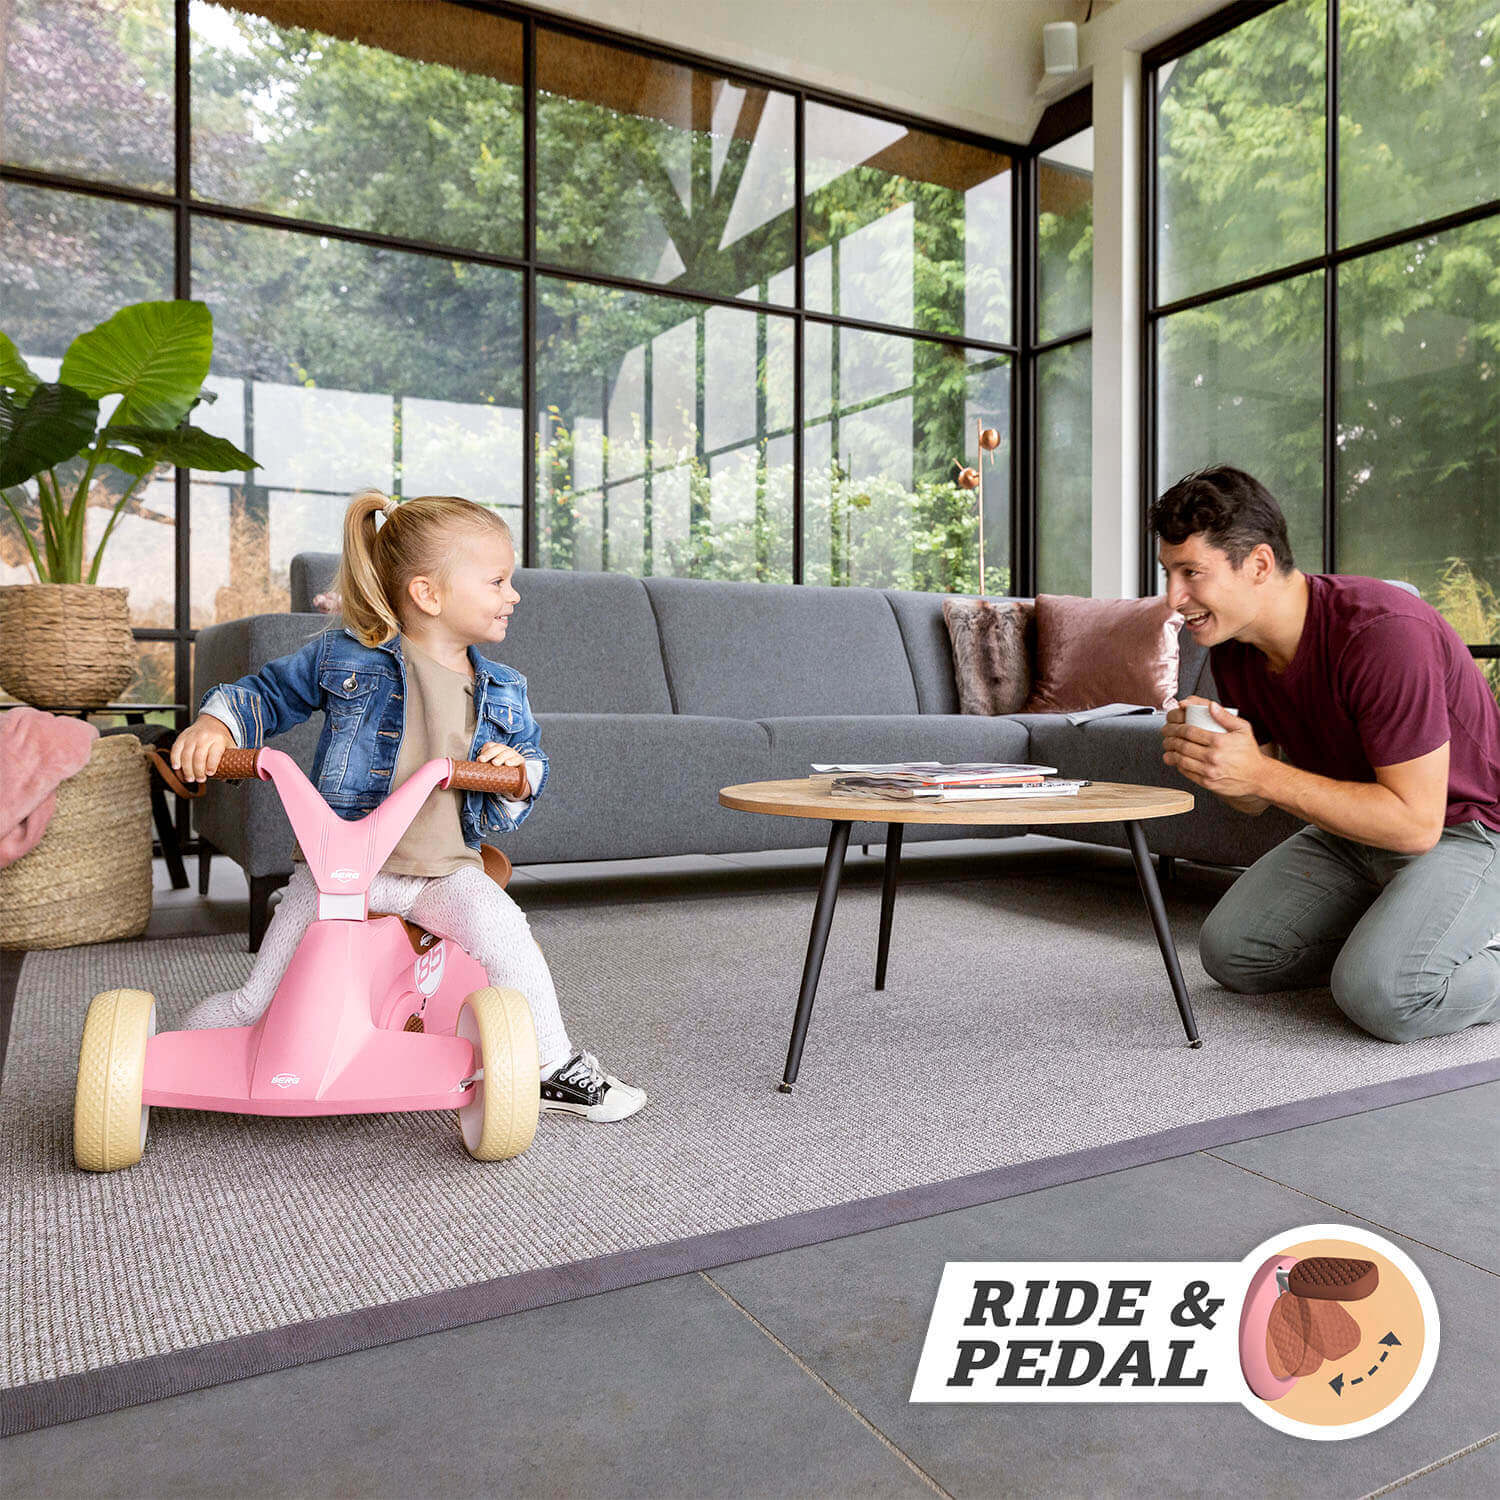 BERG Go2 Retro in Pink bringt Spaß für Babys ab 10 Monaten - gokart-profi.de